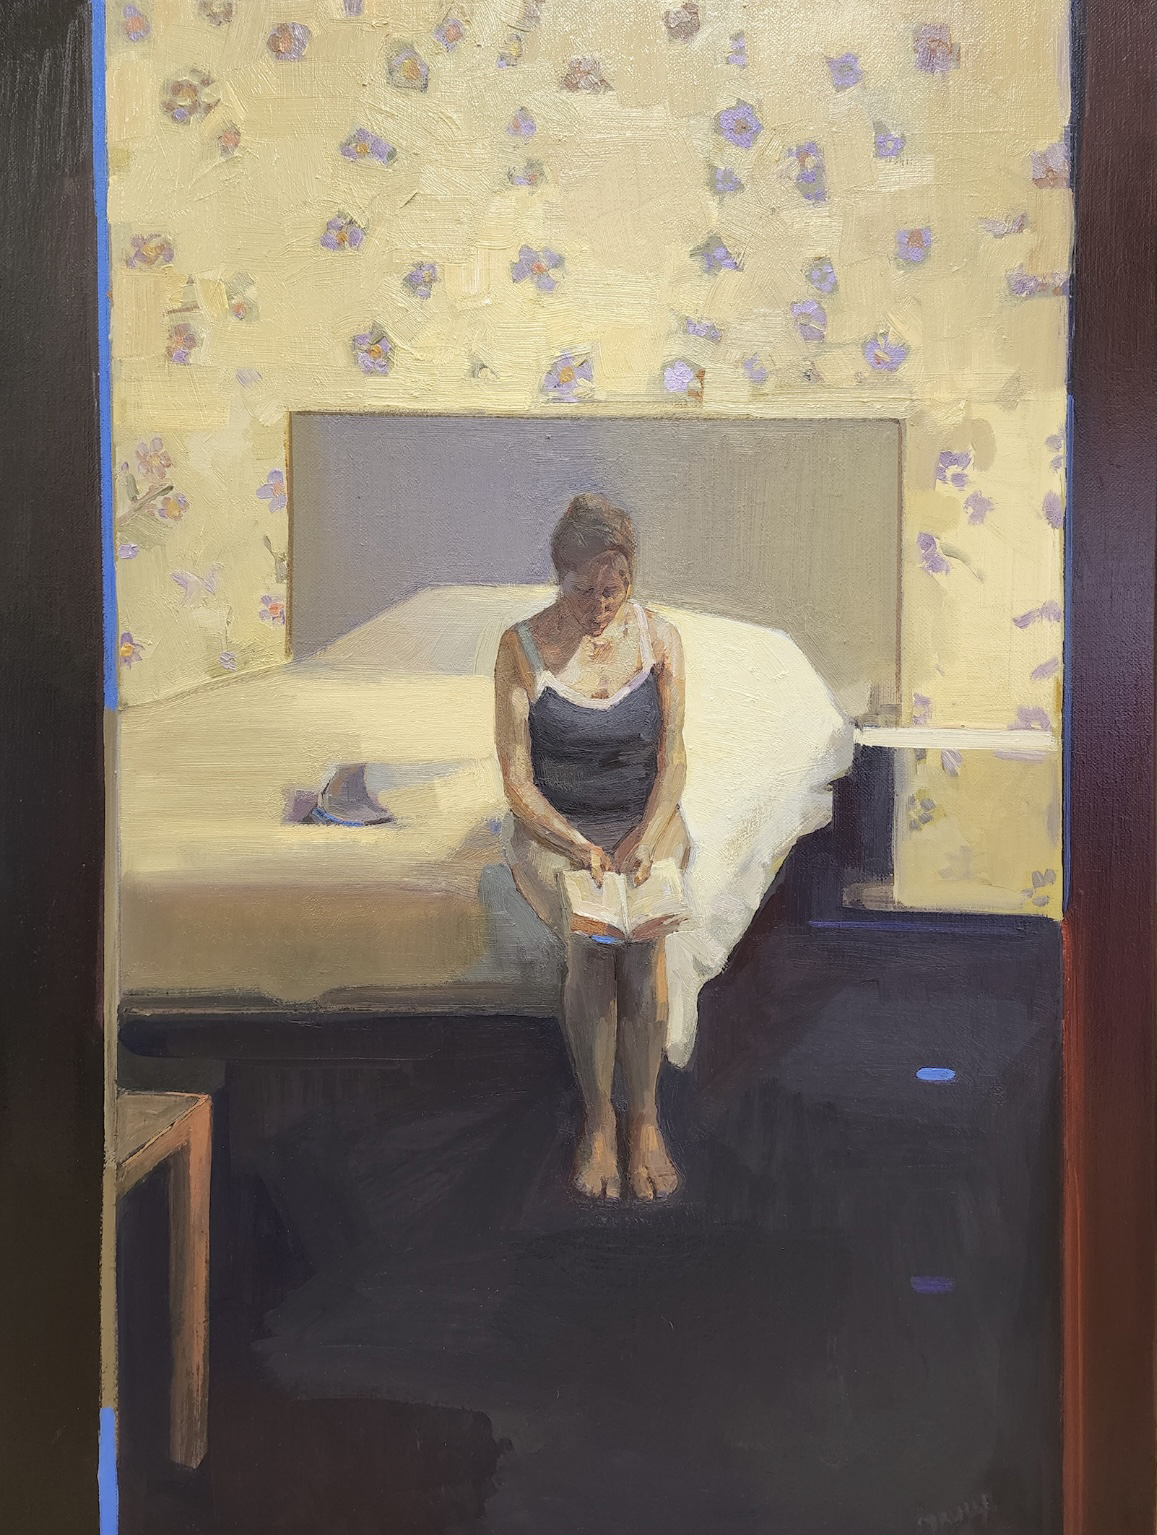 Dagmar Cyrulla 'Hotel room during Covid 1' Oil on Canvas 81 x 60cm $7,700